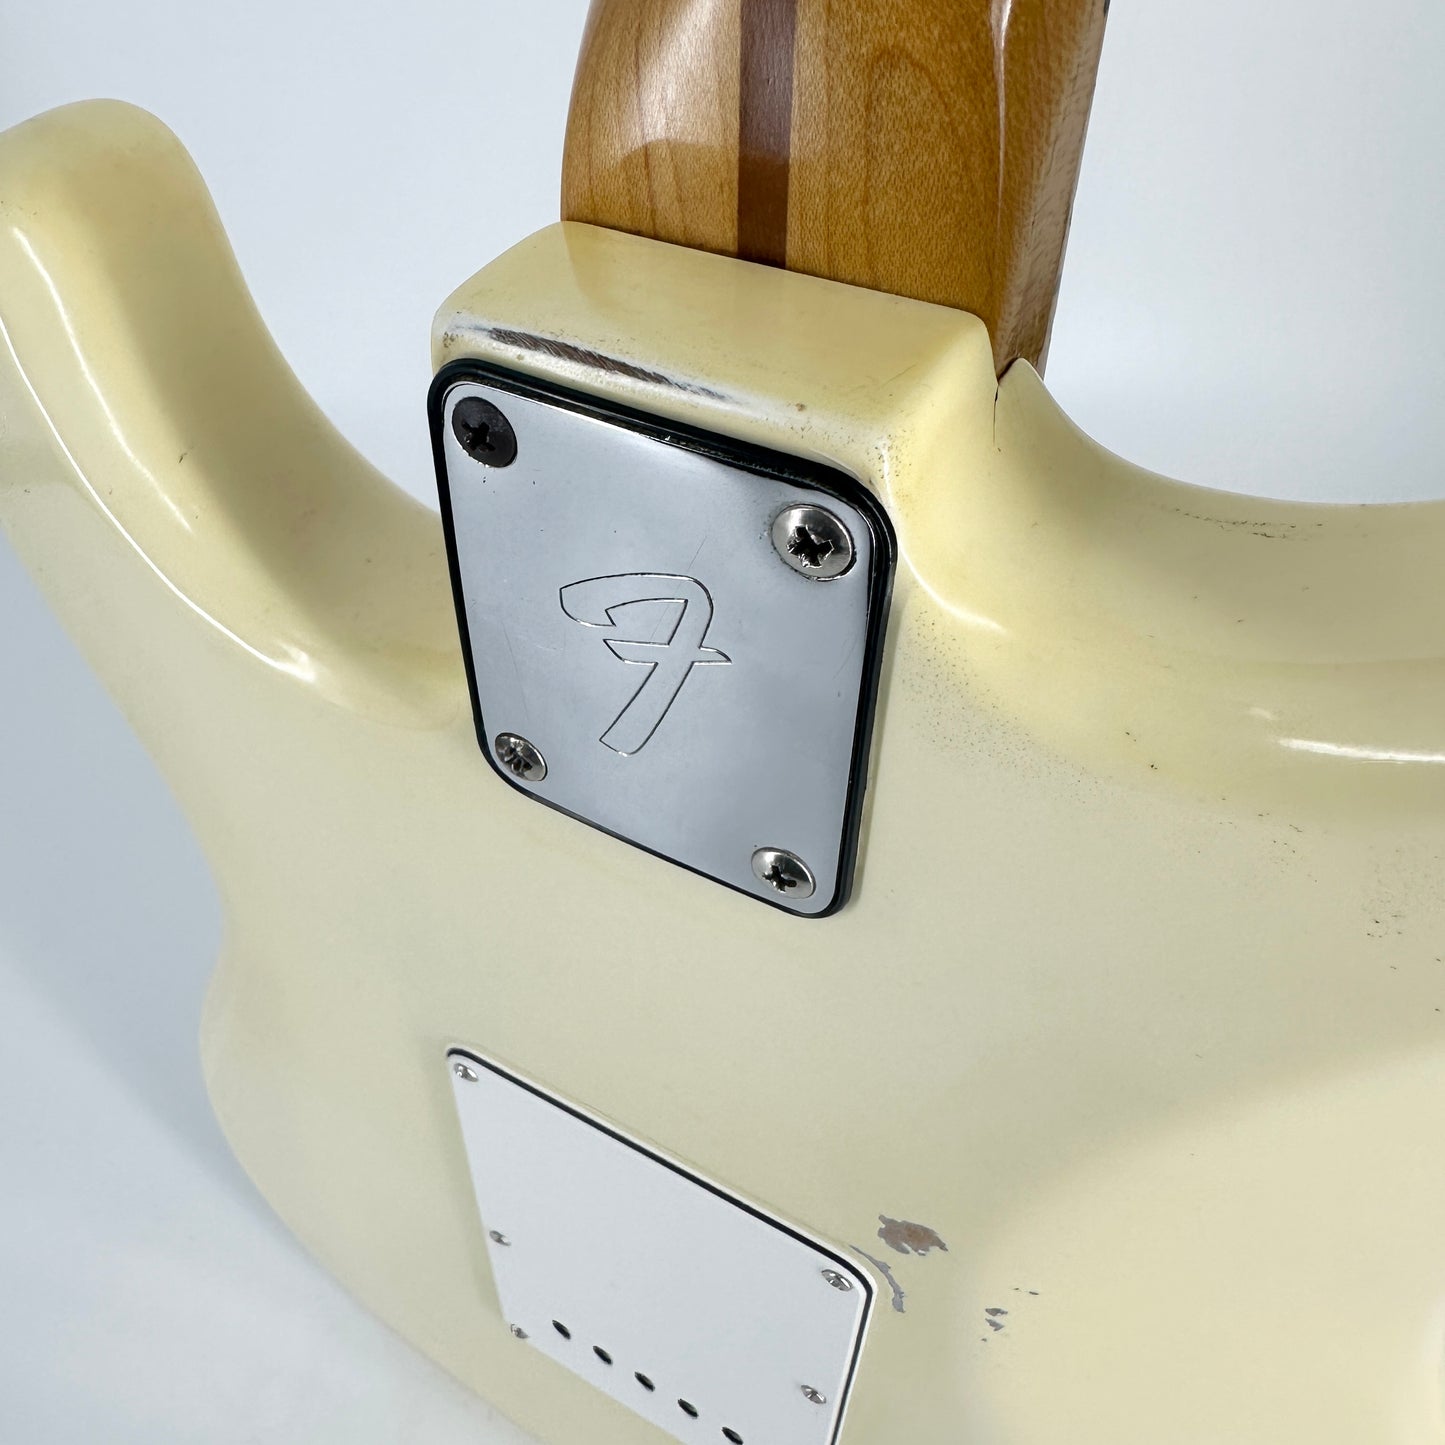 1982 Fender American Dan Smith Stratocaster – White